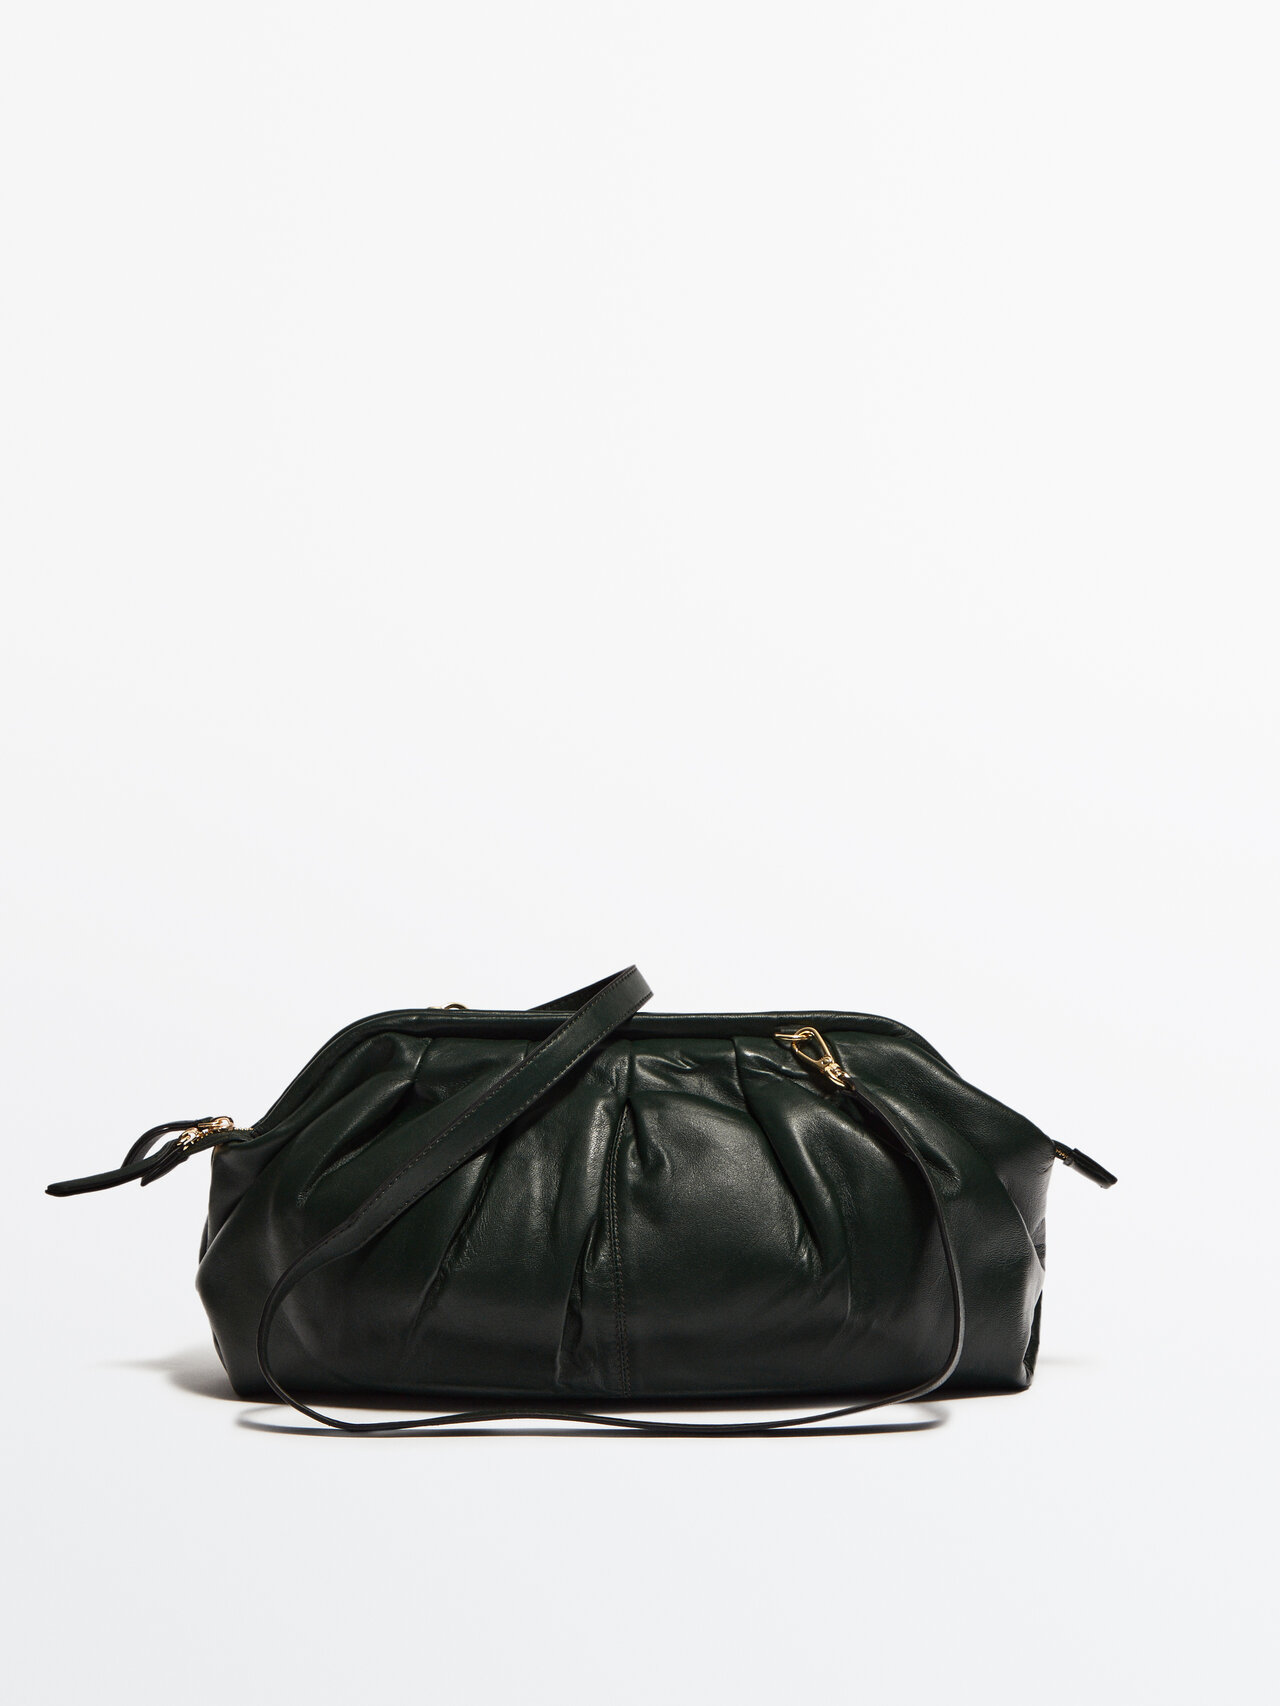 Massimo Dutti Gathered Xl Leather Bag - Studio In Green